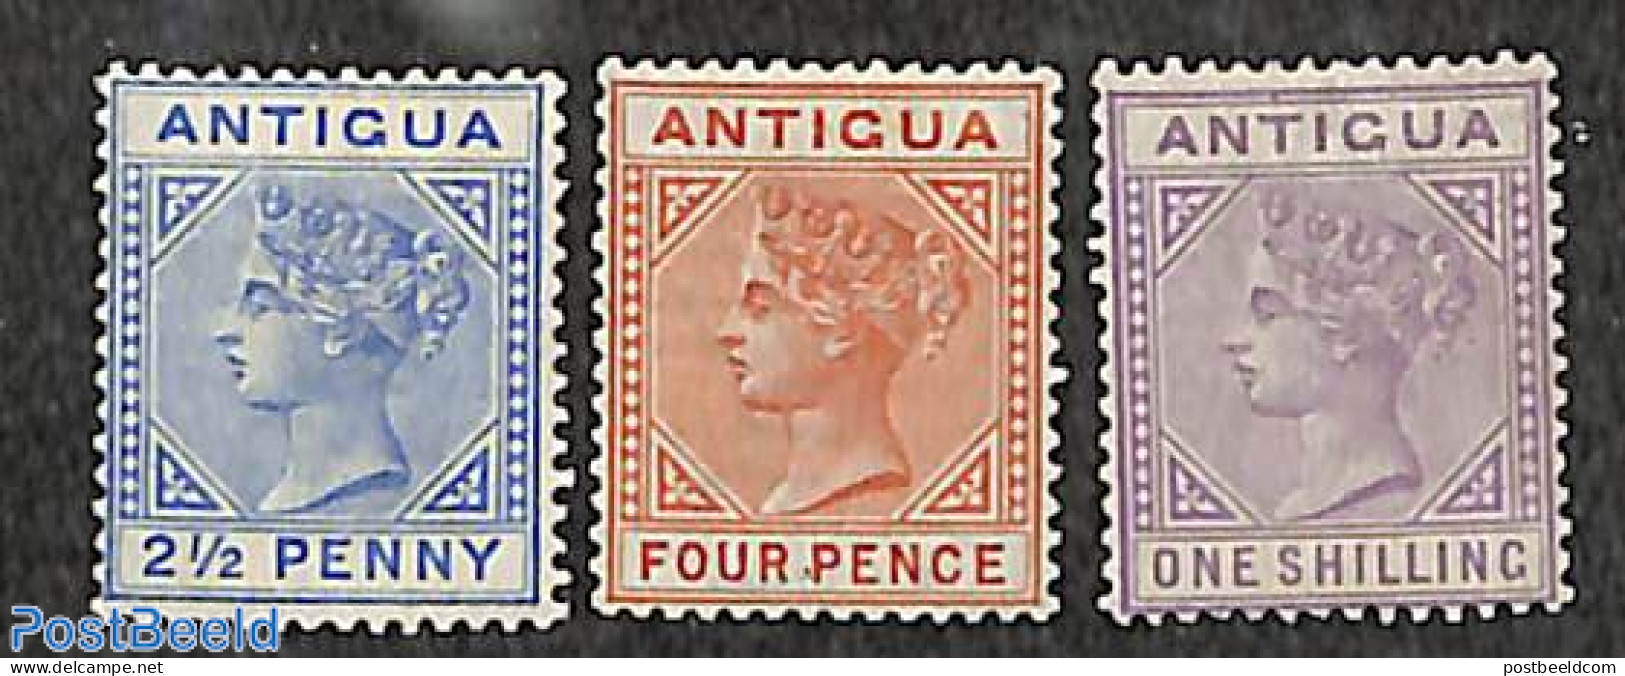 Antigua & Barbuda 1886 Queen Victoria 3v, WM CA-Crown, Unused (hinged) - Antigua And Barbuda (1981-...)